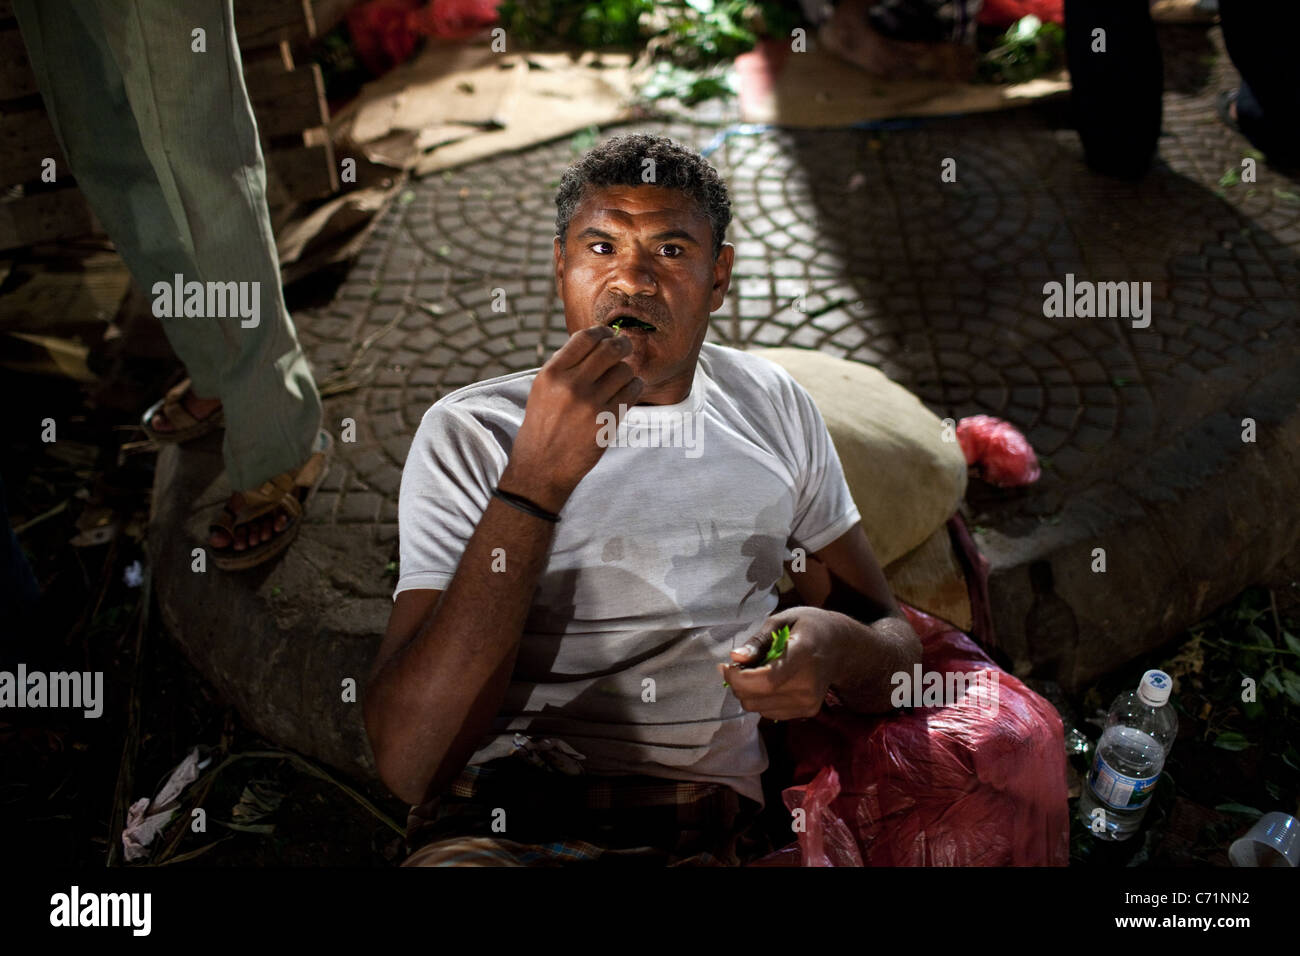 A man chews and sells khat (qat) at the night khat market in Aden, Yemen. Stock Photo